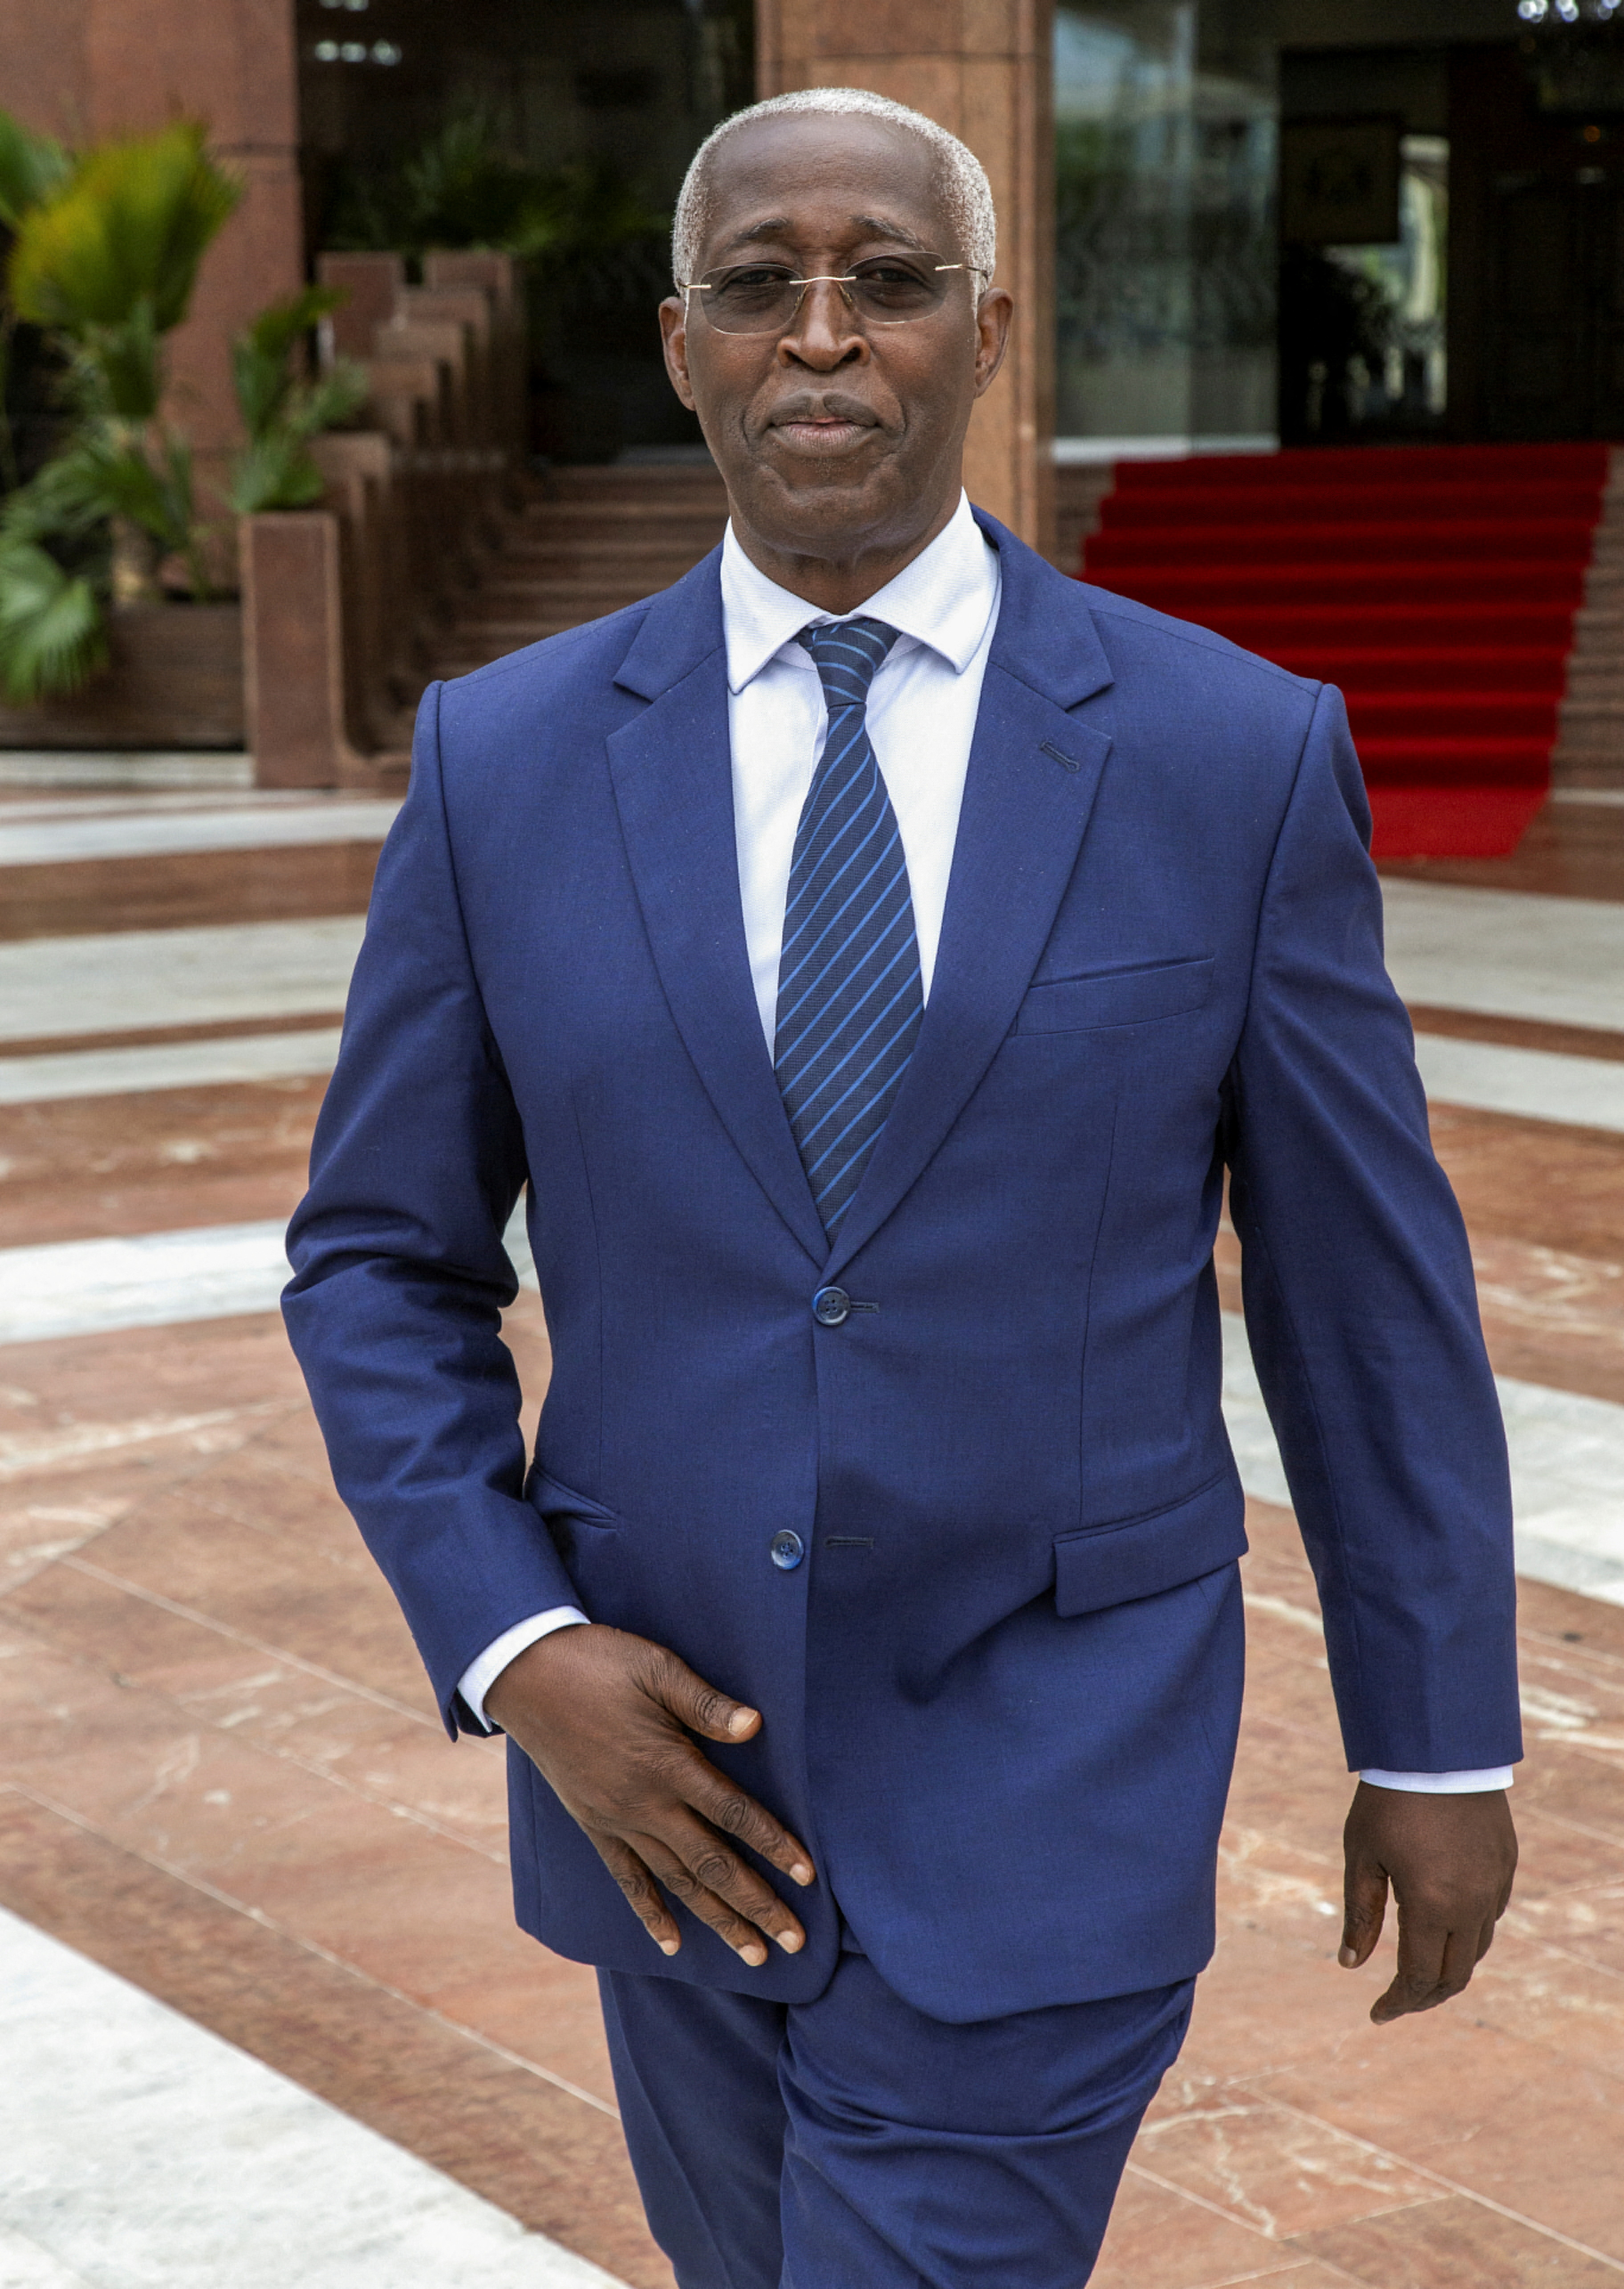 Gabon junta appoints former opposition leader as interim PM